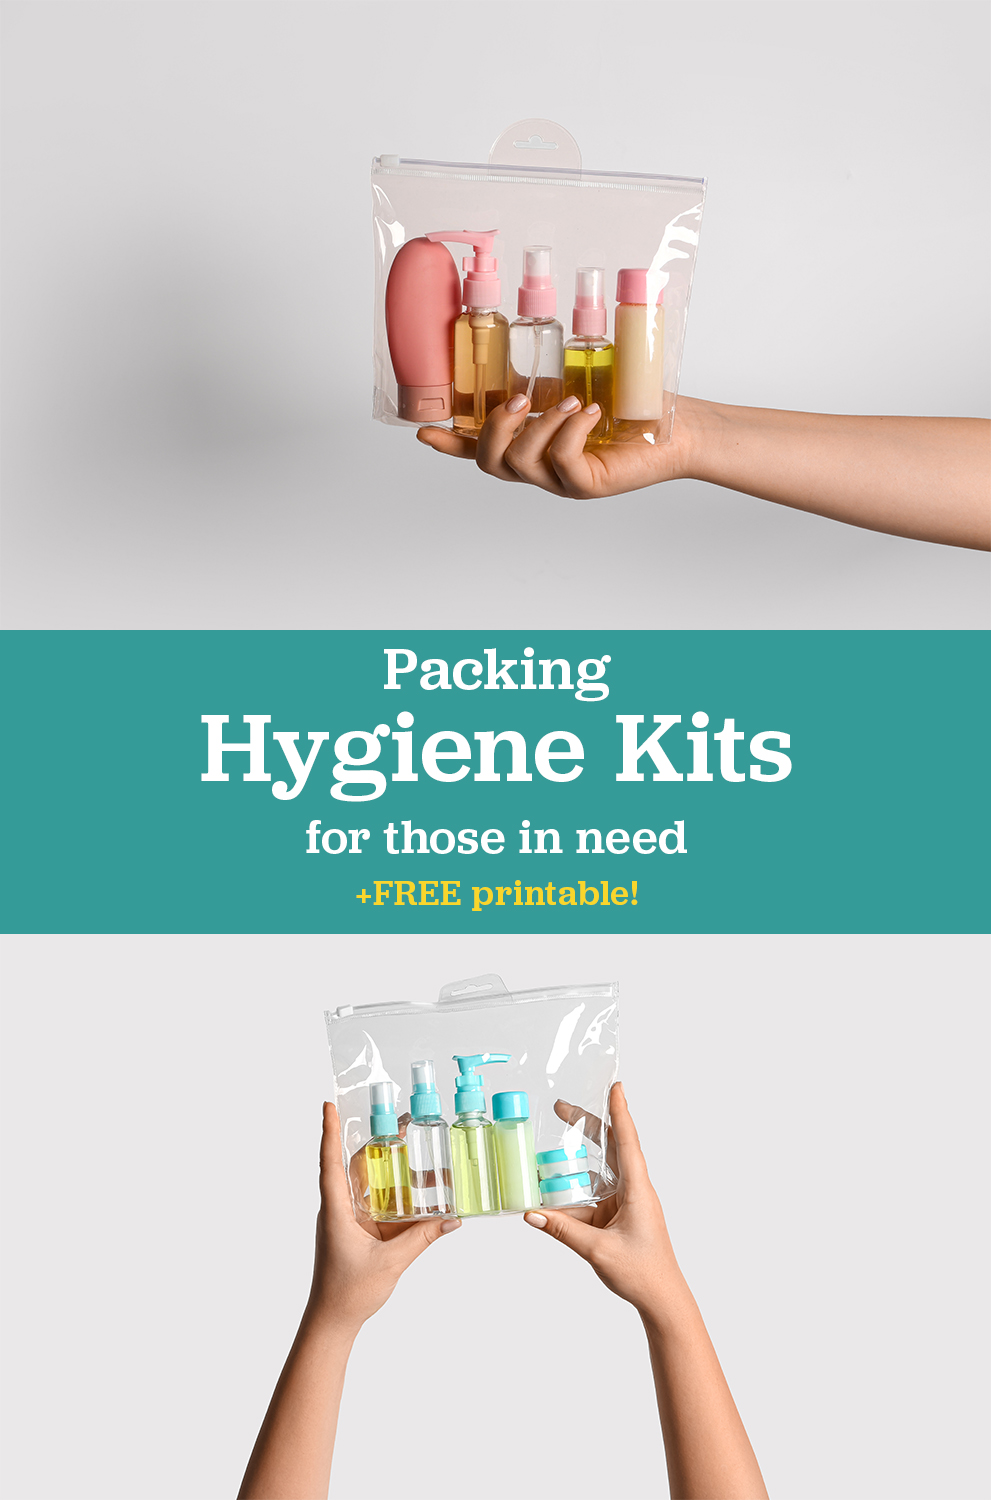 hygiene kits, helping homeless, personal care kits, kits for homeless